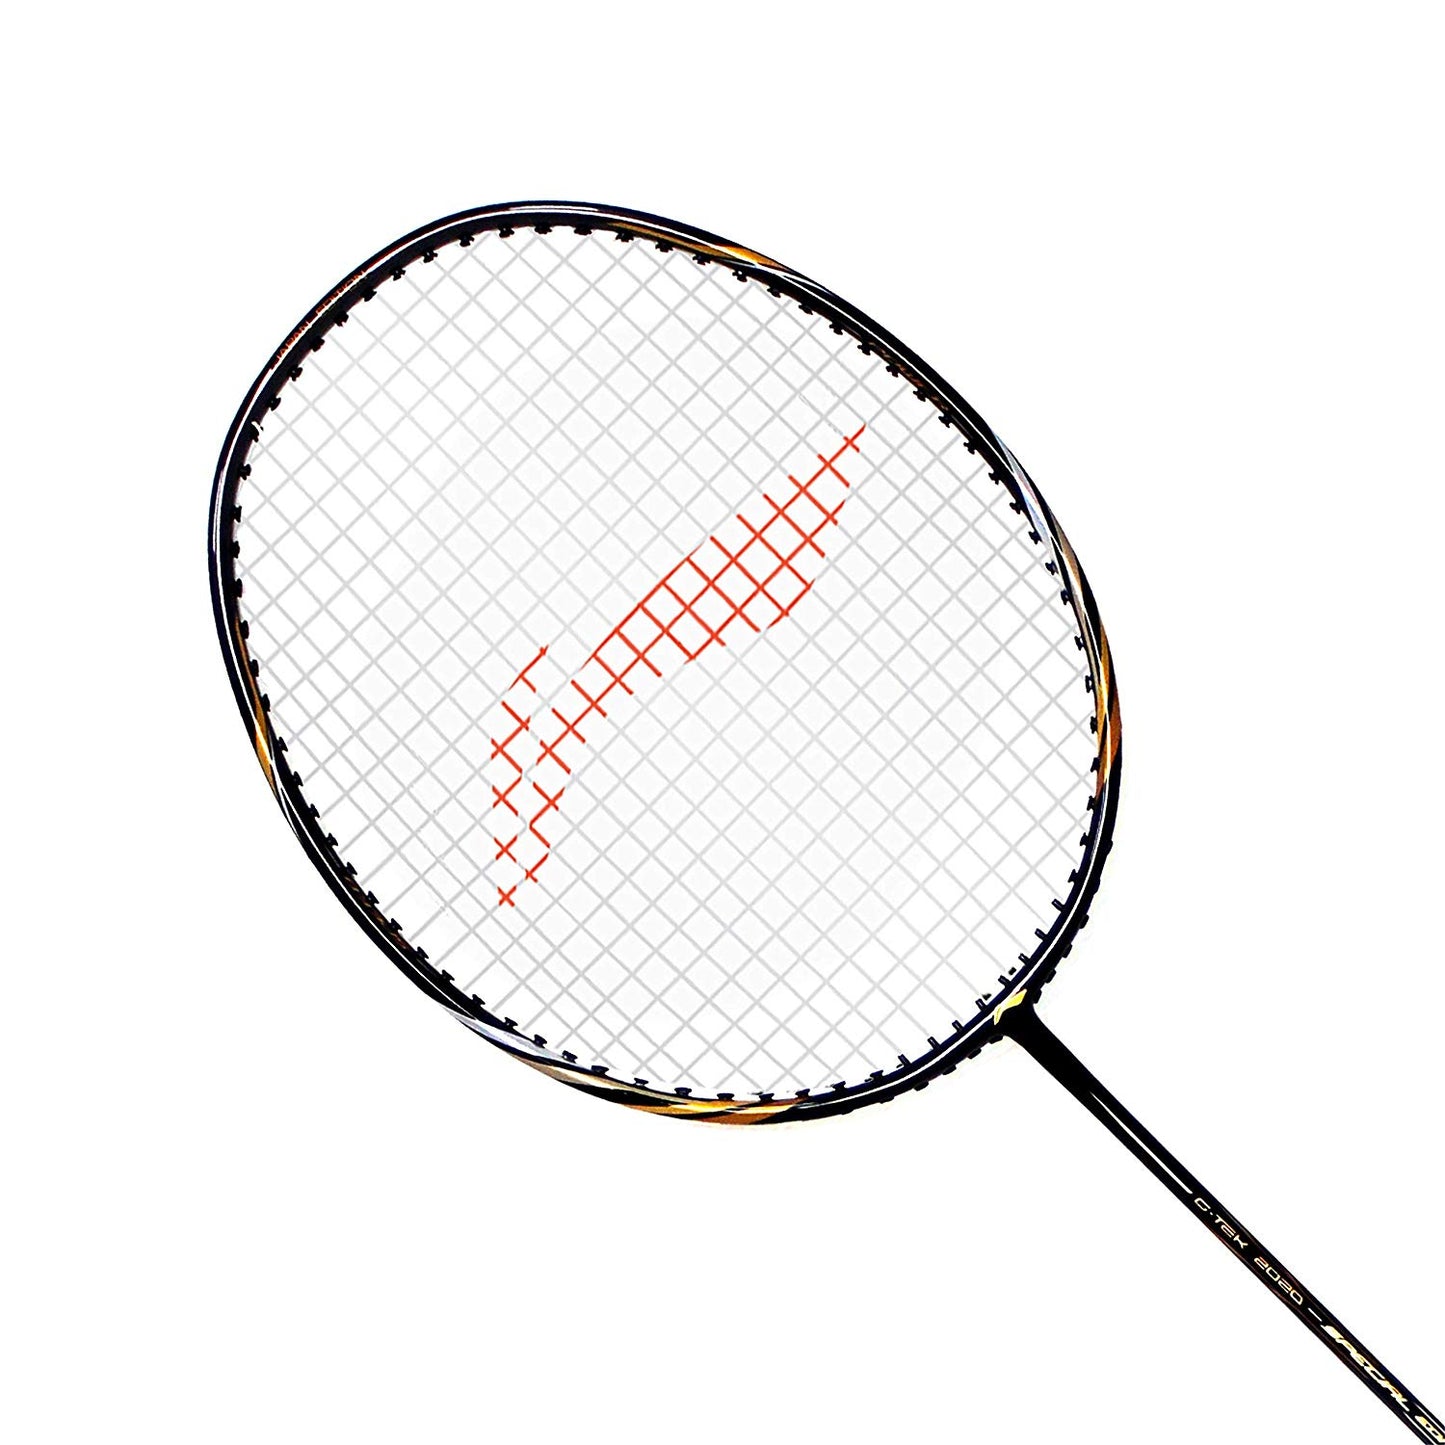 Li-Ning G-TEK 2020 (Strung) Badminton Racquets with Free Full Cover Blend, (Black/Dk Grey) - Best Price online Prokicksports.com